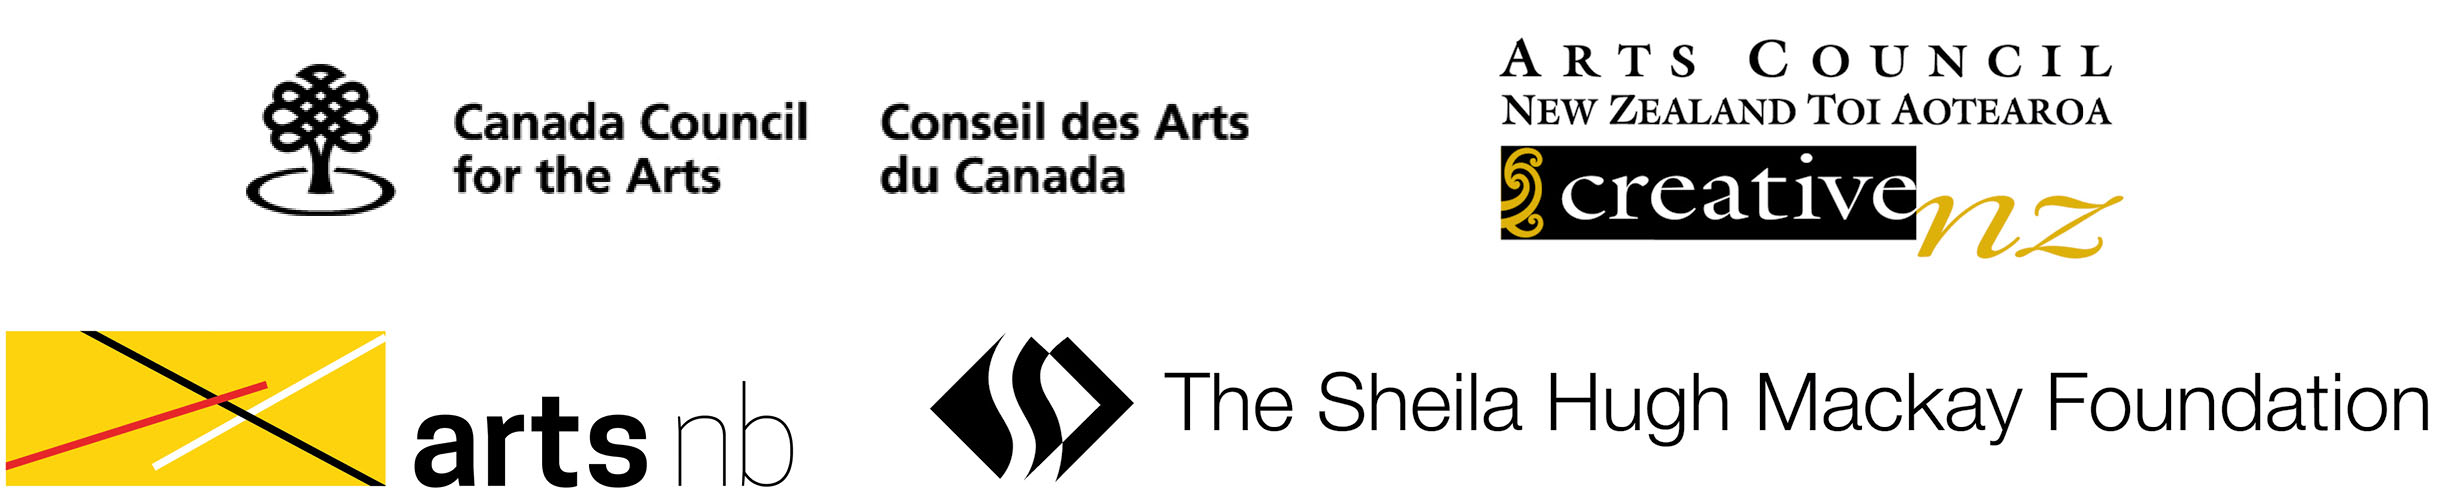 Logos for Canada Council for the Arts, Arts Council New Zealand Toi Aotearoa Creative NZ, ArtsNB and The Sheila High Mackay Foundation.